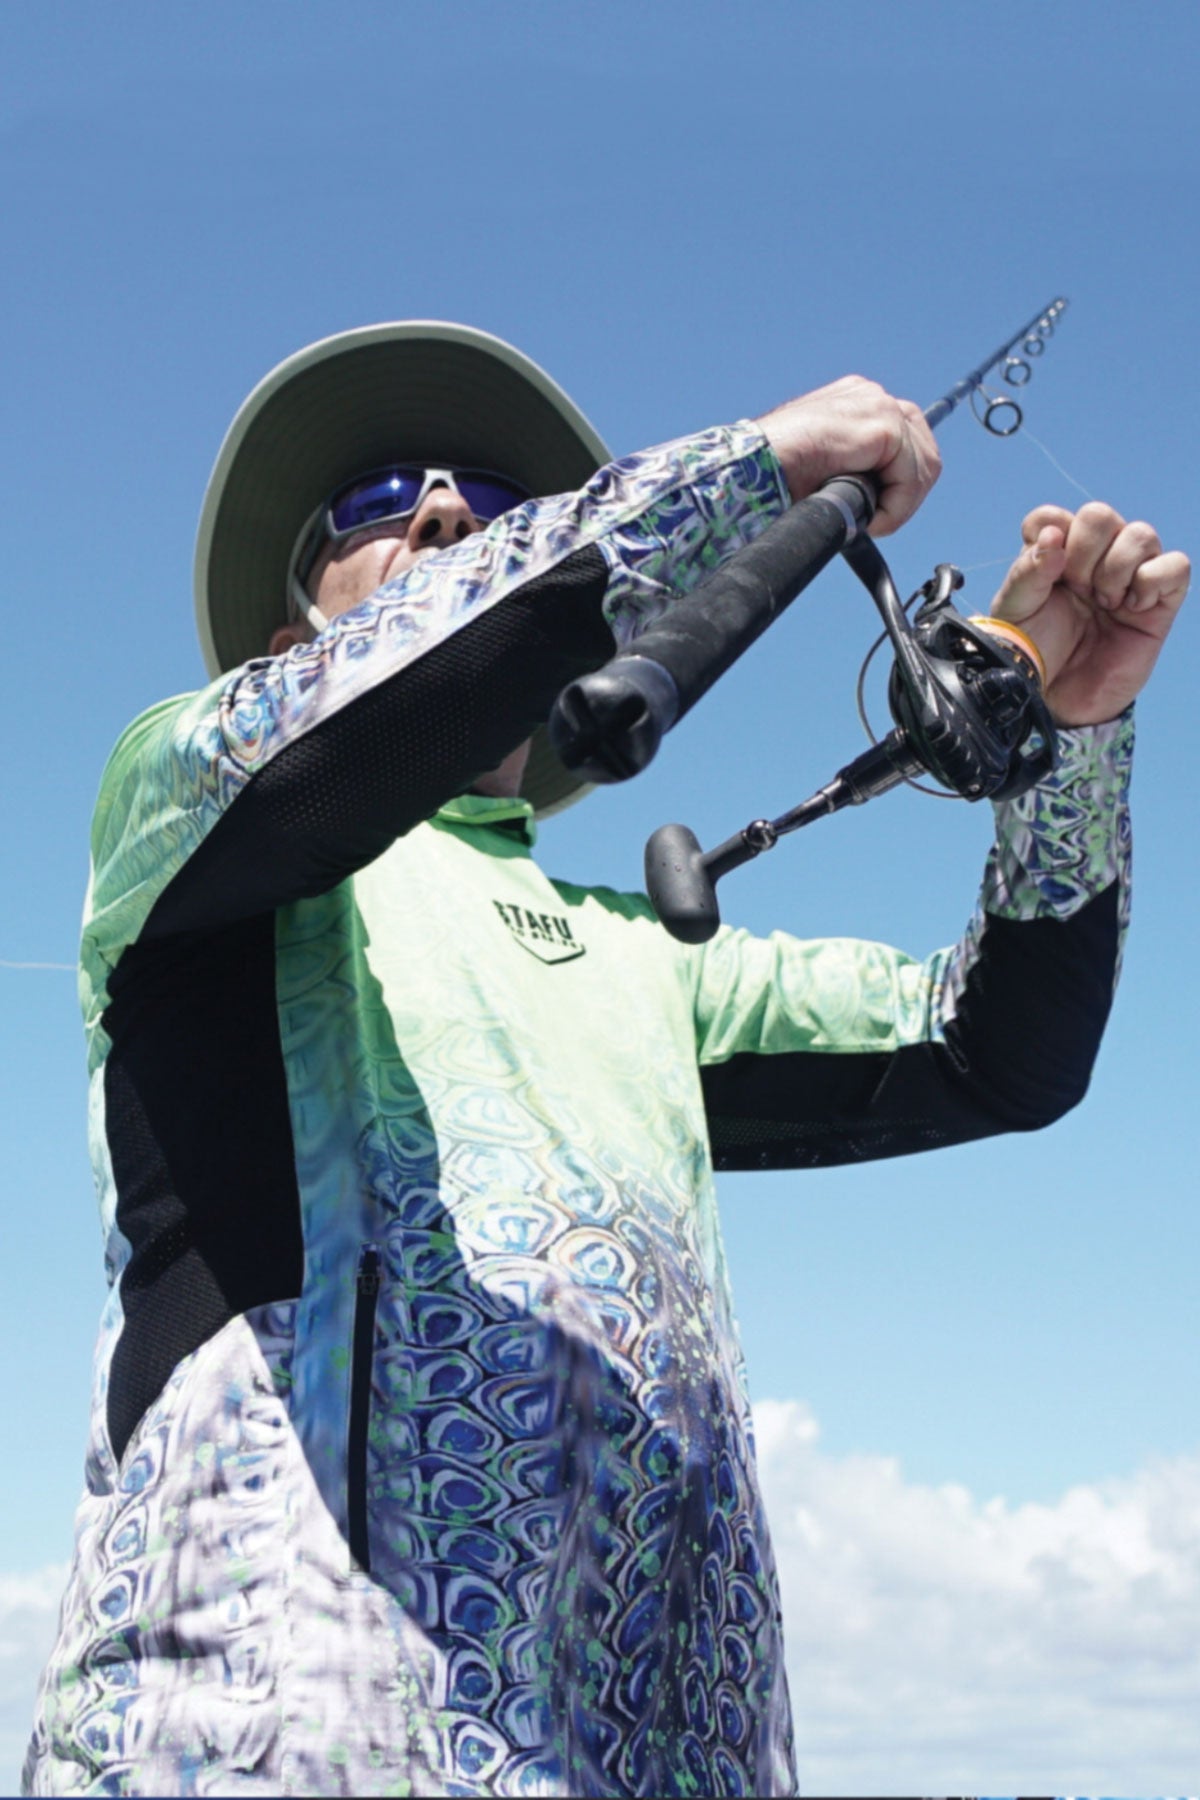 Argonaut Hooded Fishing Shirt - Arapaima - Stafu Pro Series